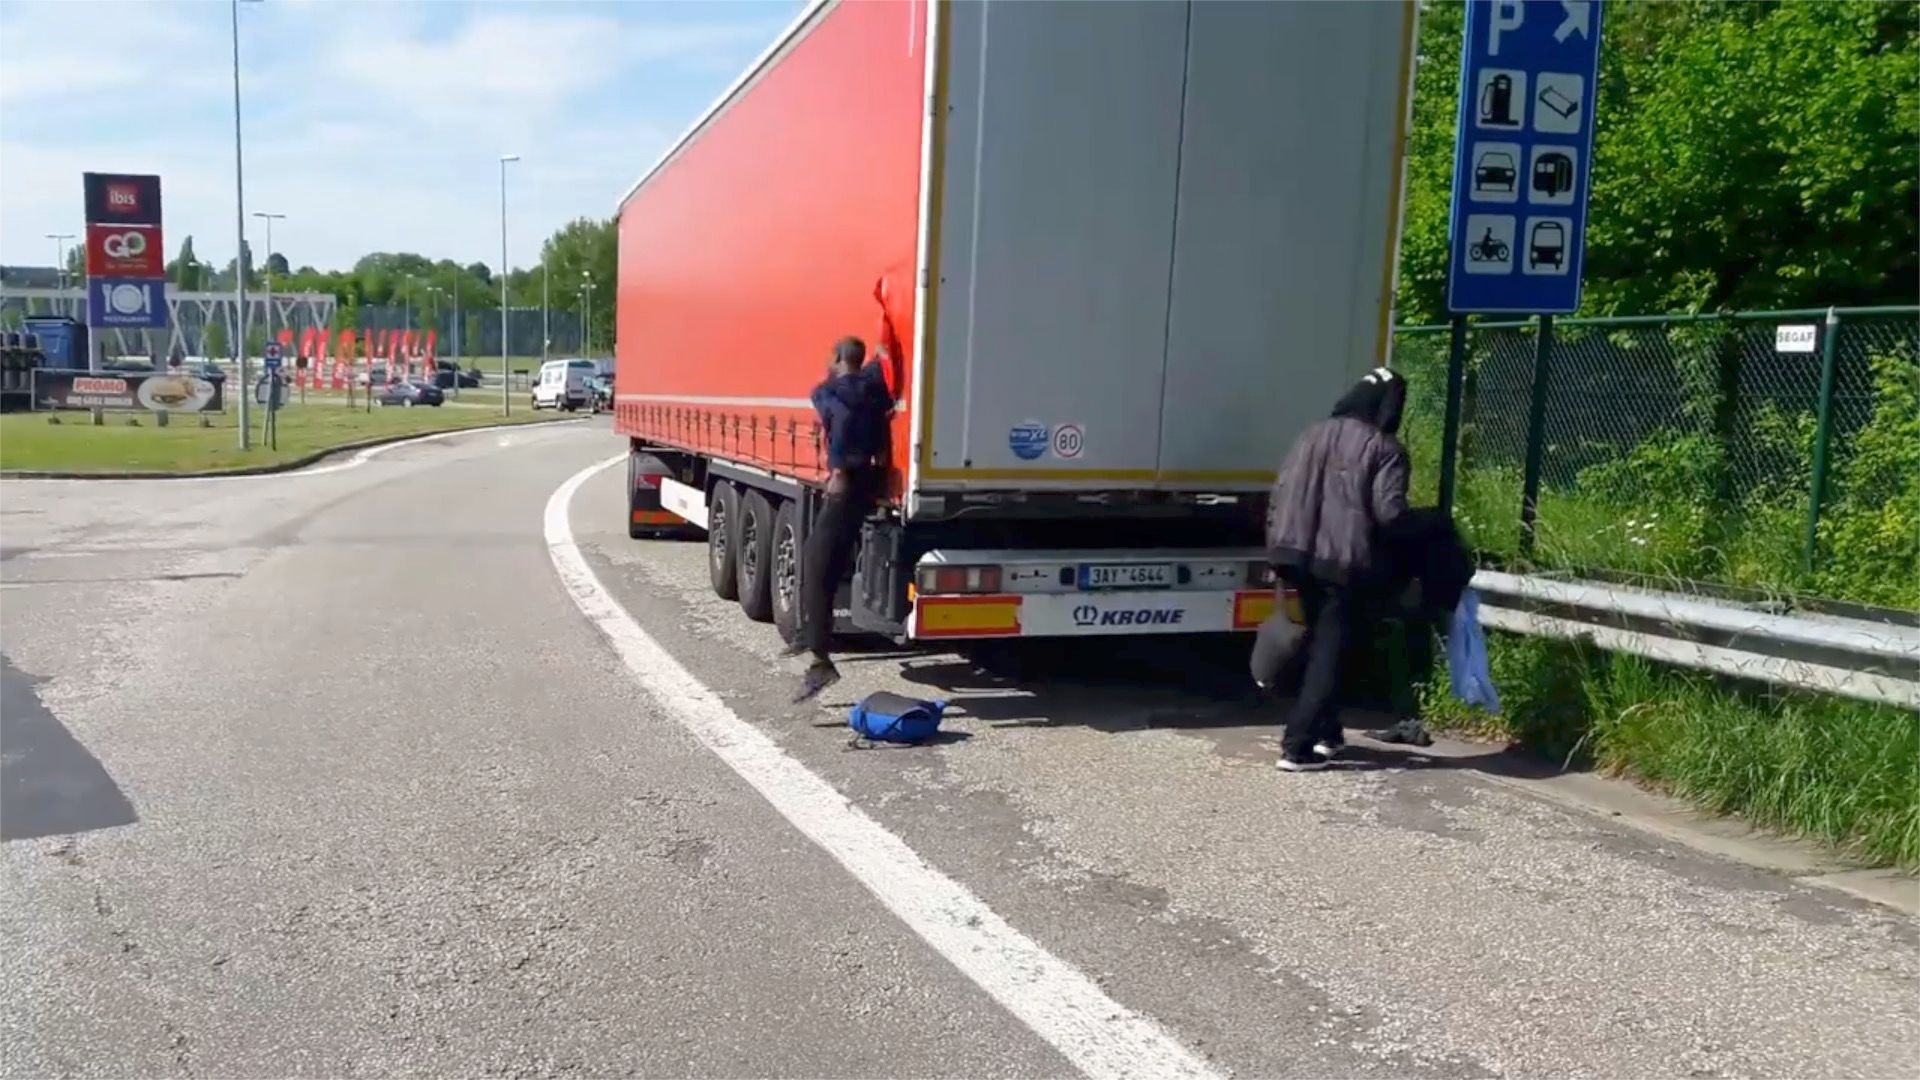 Cesta hrůzy do Calais. Migranti v Belgii obsadili český kamion